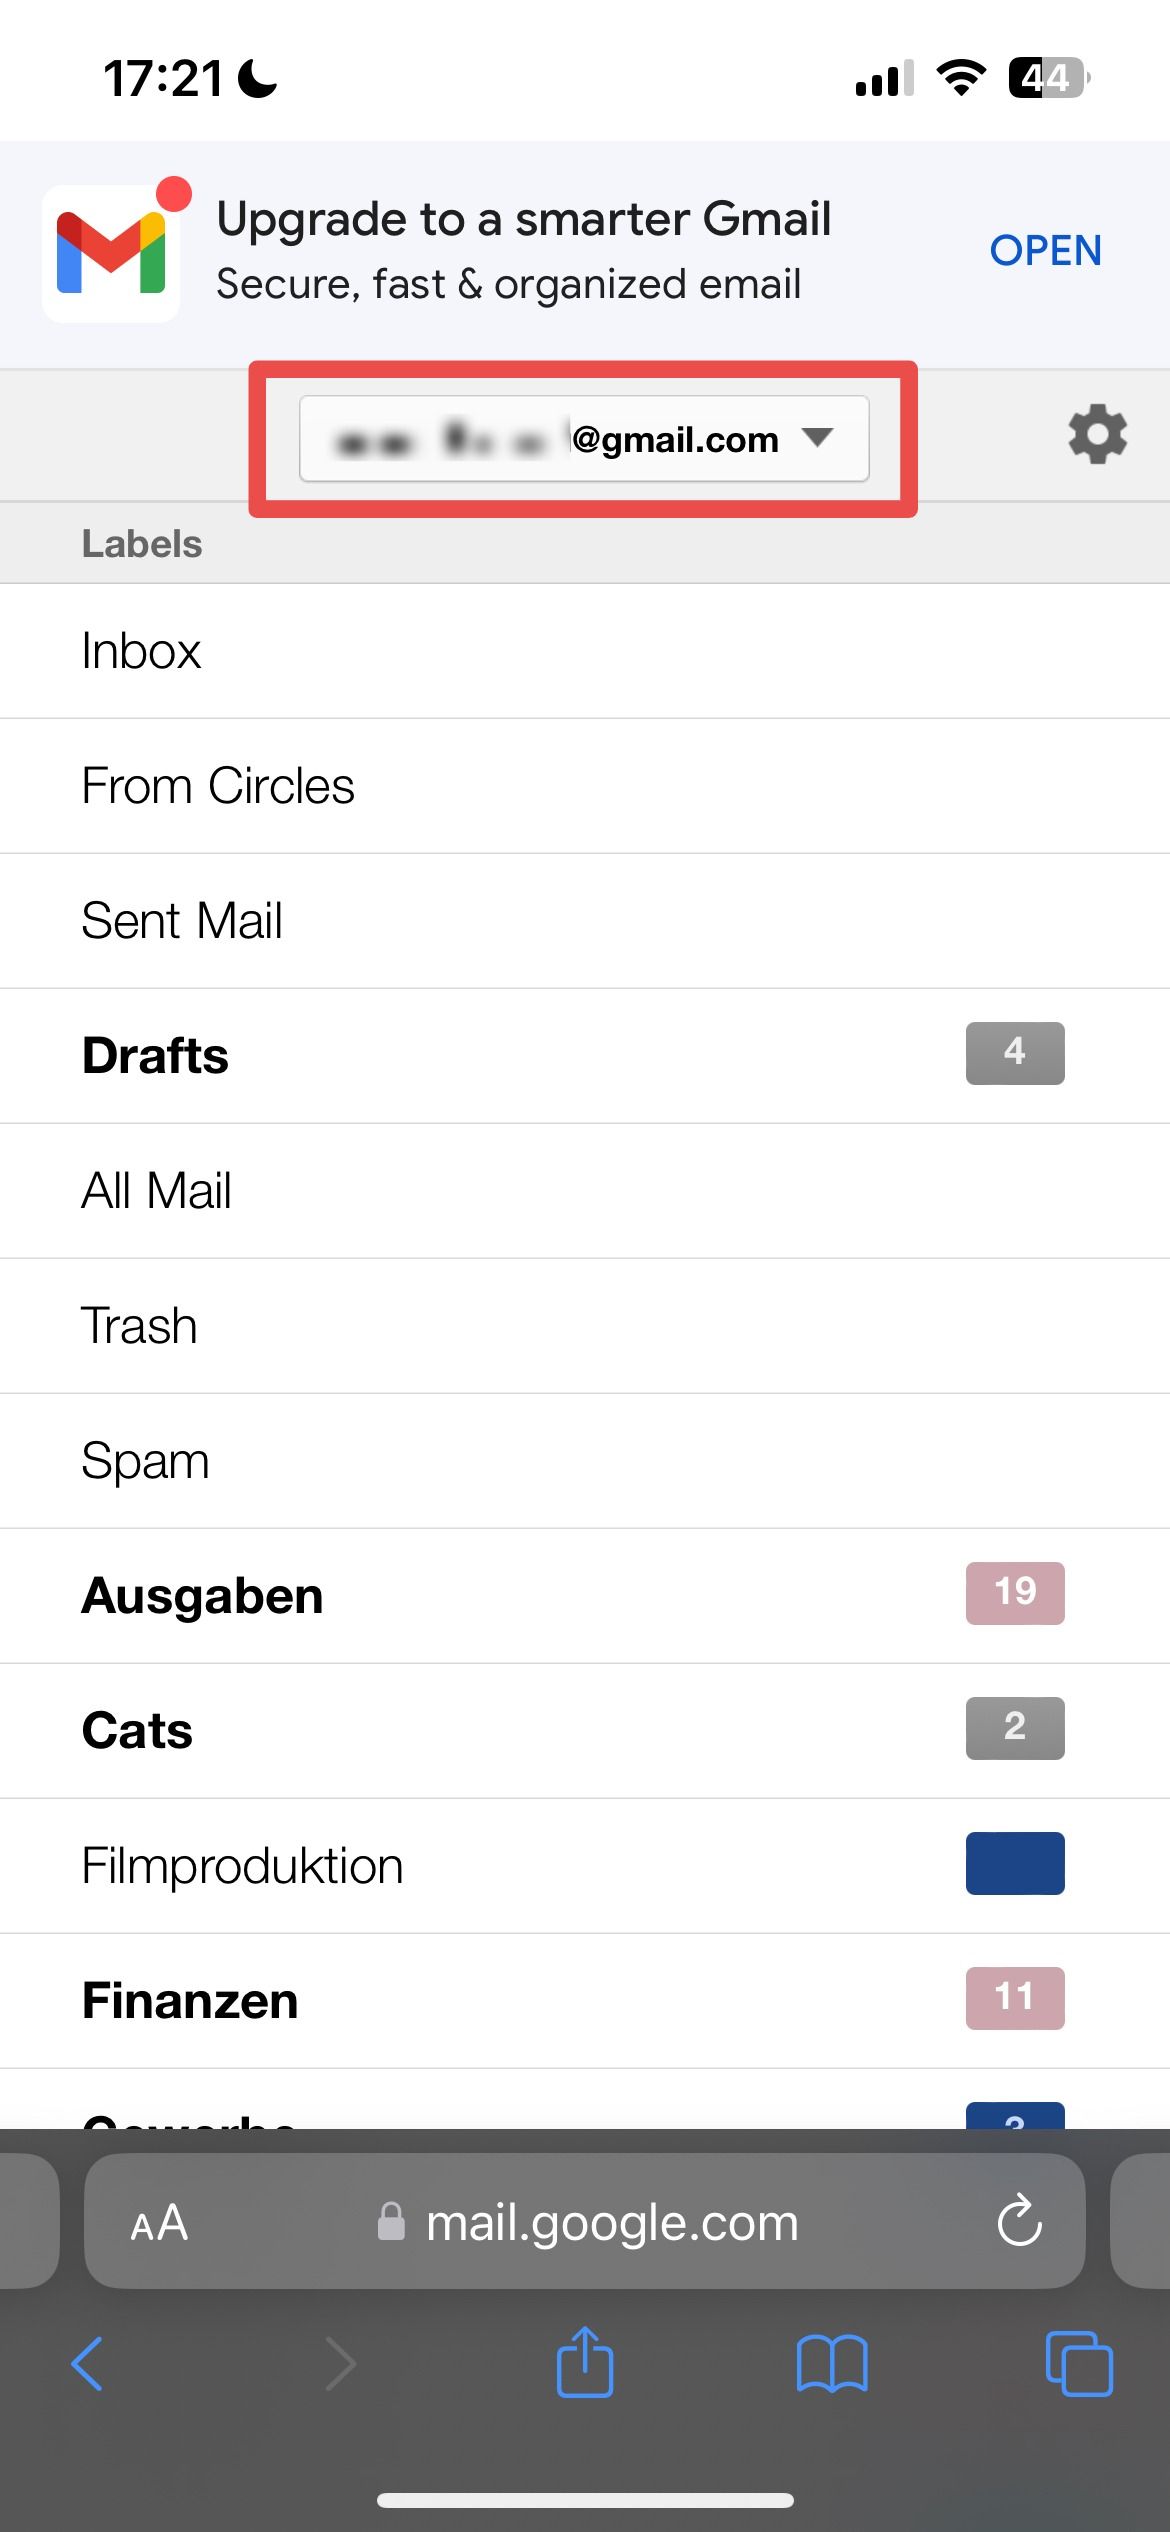 Barra lateral do Gmail no aplicativo da web para iPhone